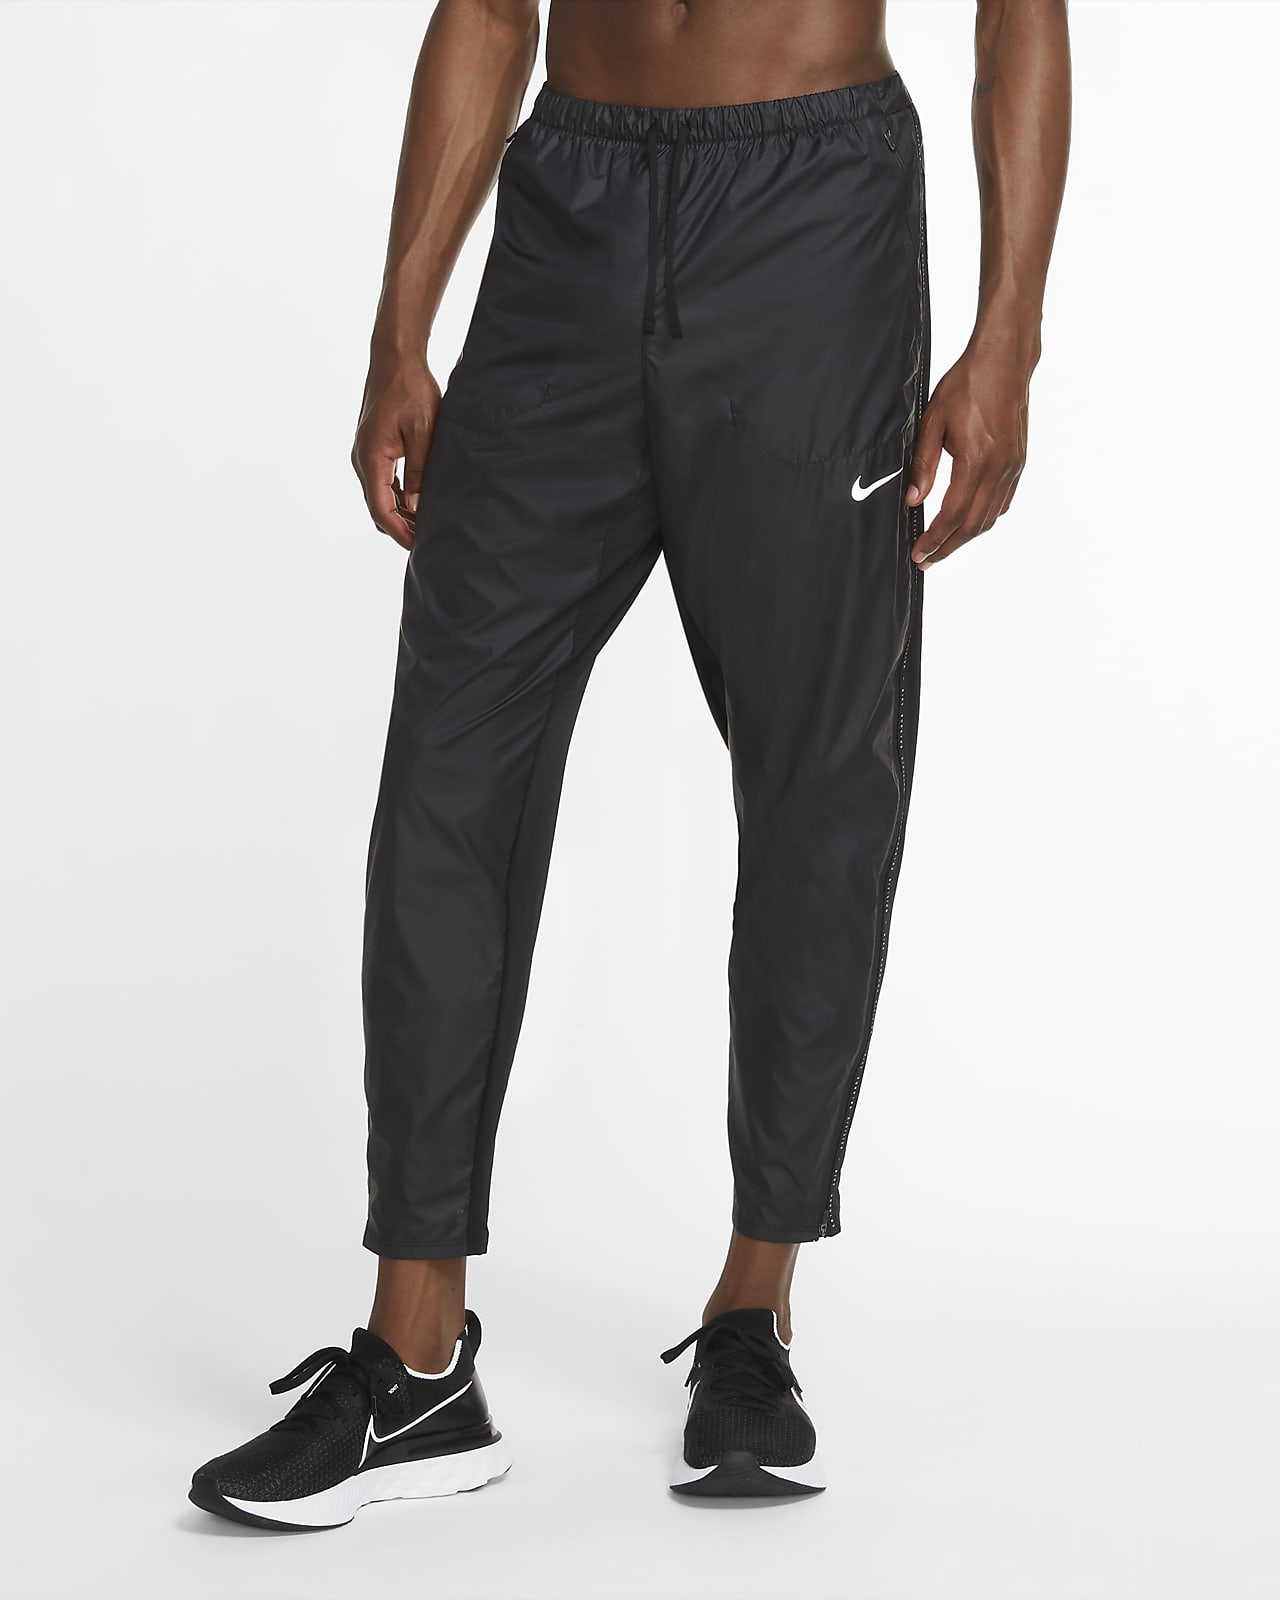 Pantalones de running para hombre Nike Phenom Elite Shield Run Division.  Nike.com